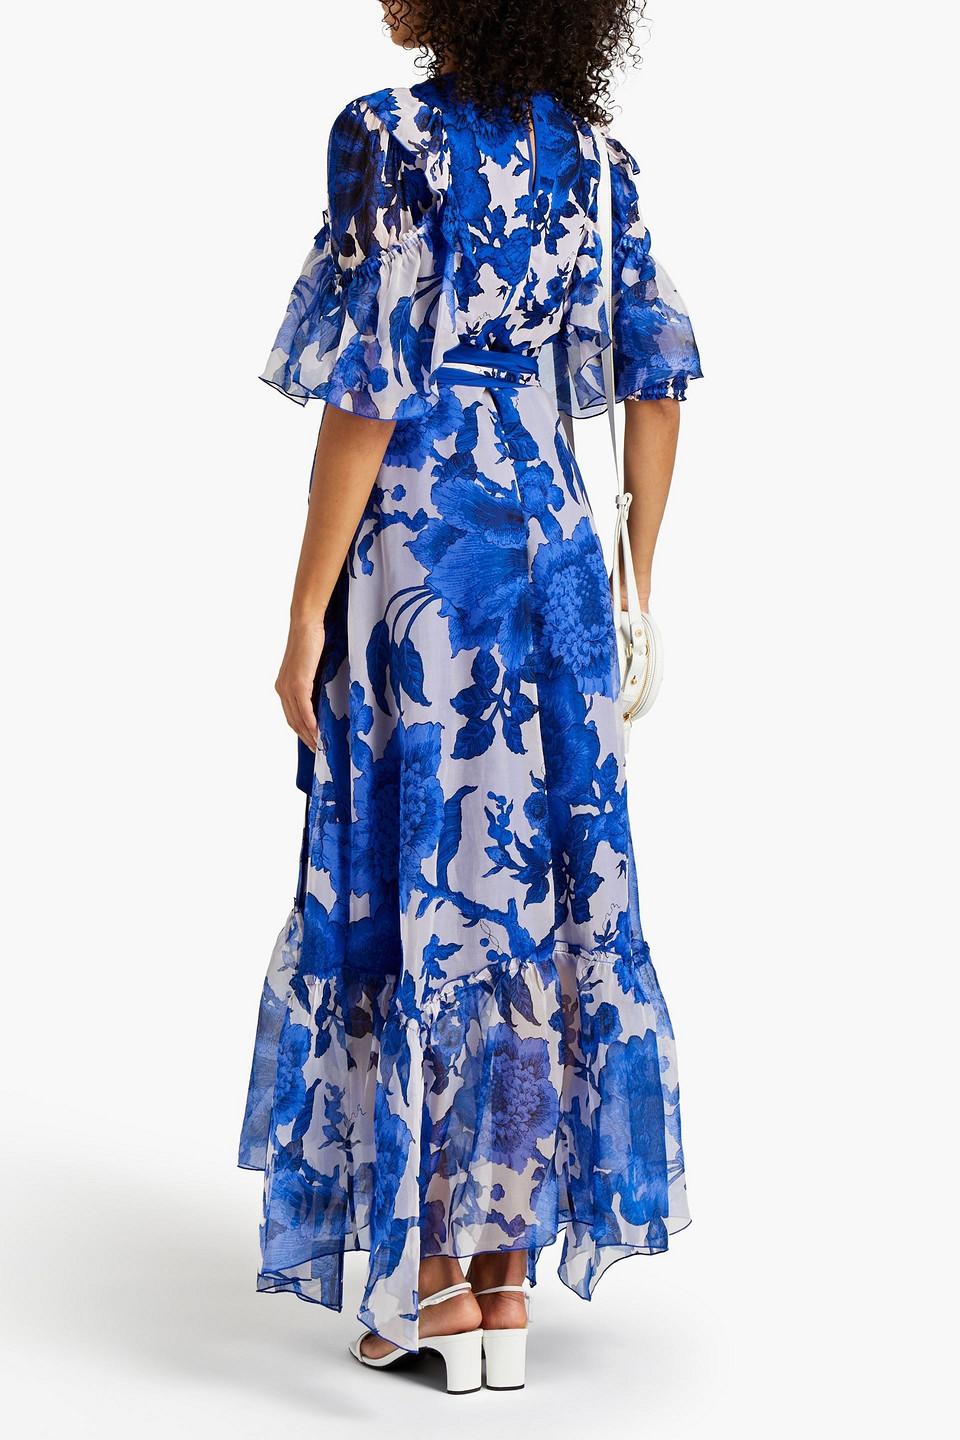 Louis Vuitton Blue Floral Printed Silk Belted Bustier Mini Dress M